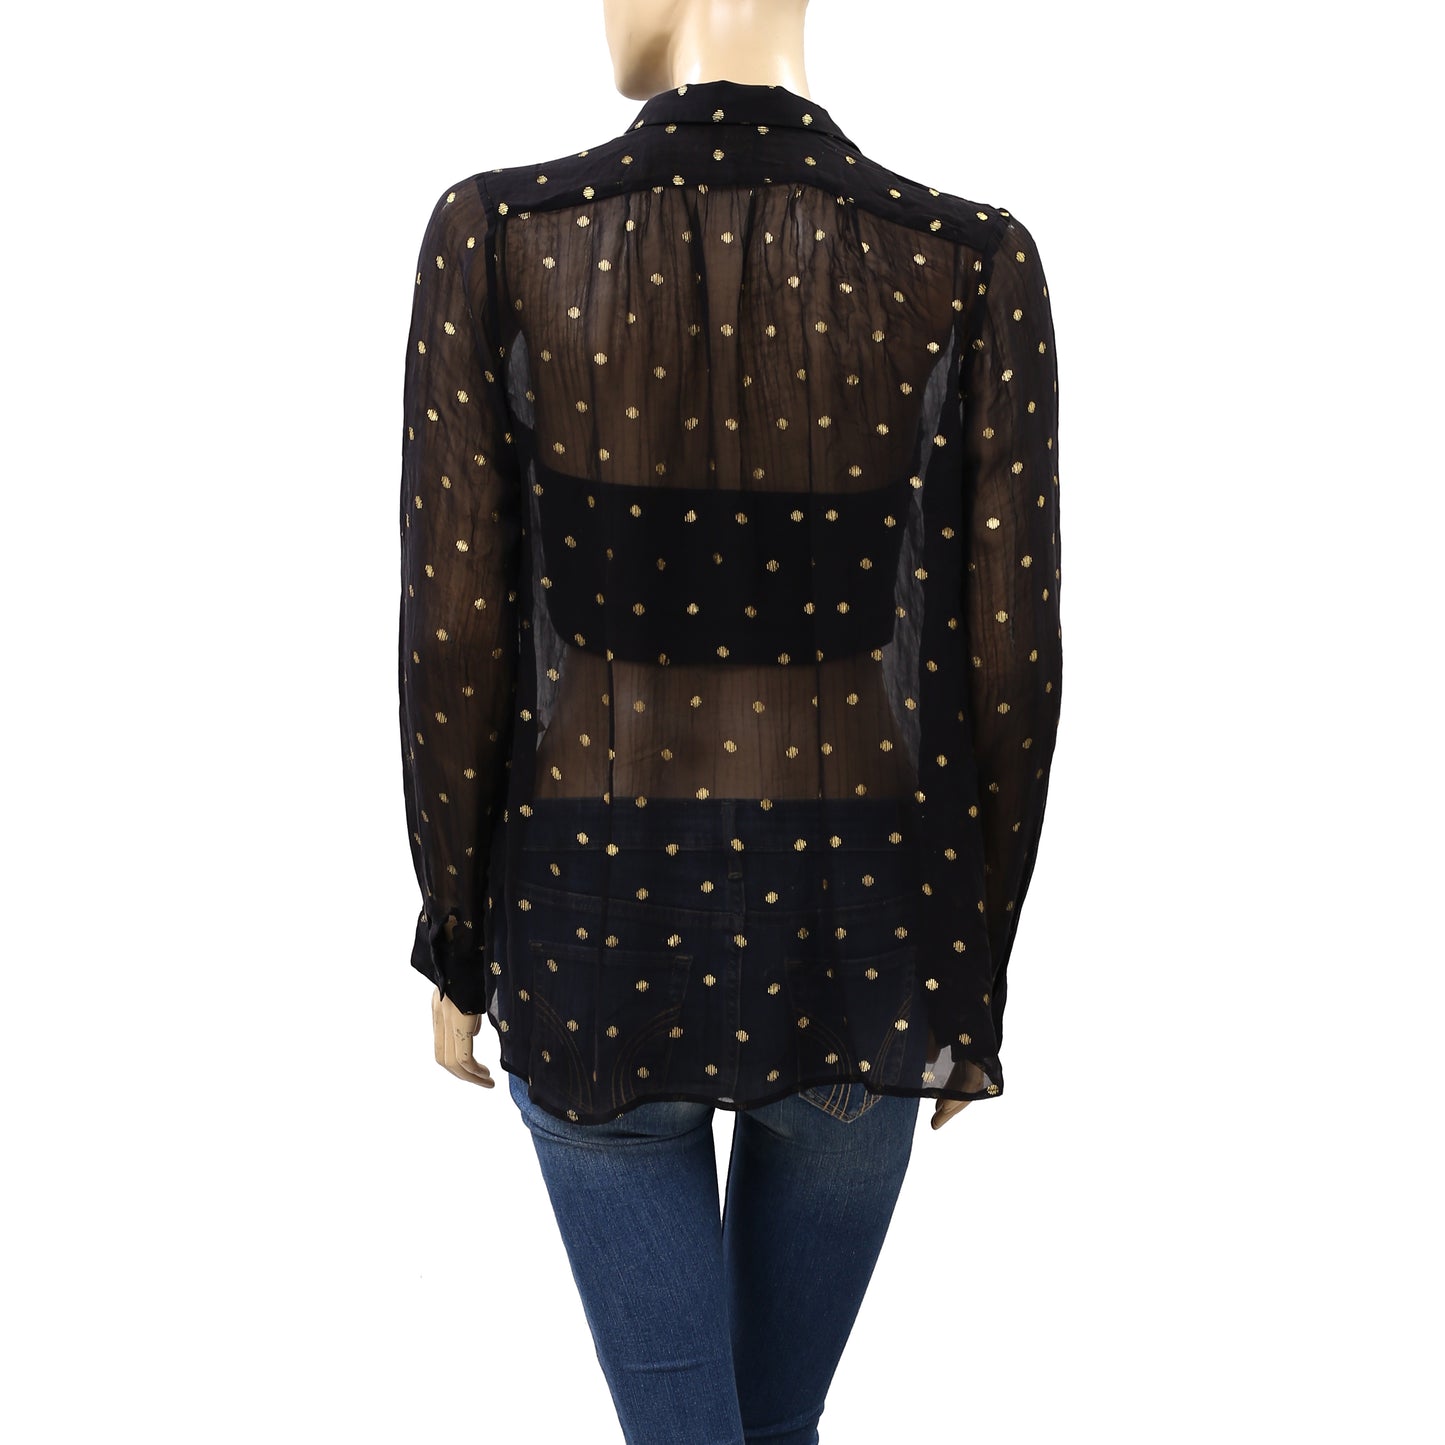 Petite Mendigote Paris Shimmer Black Shirt Tunic Top